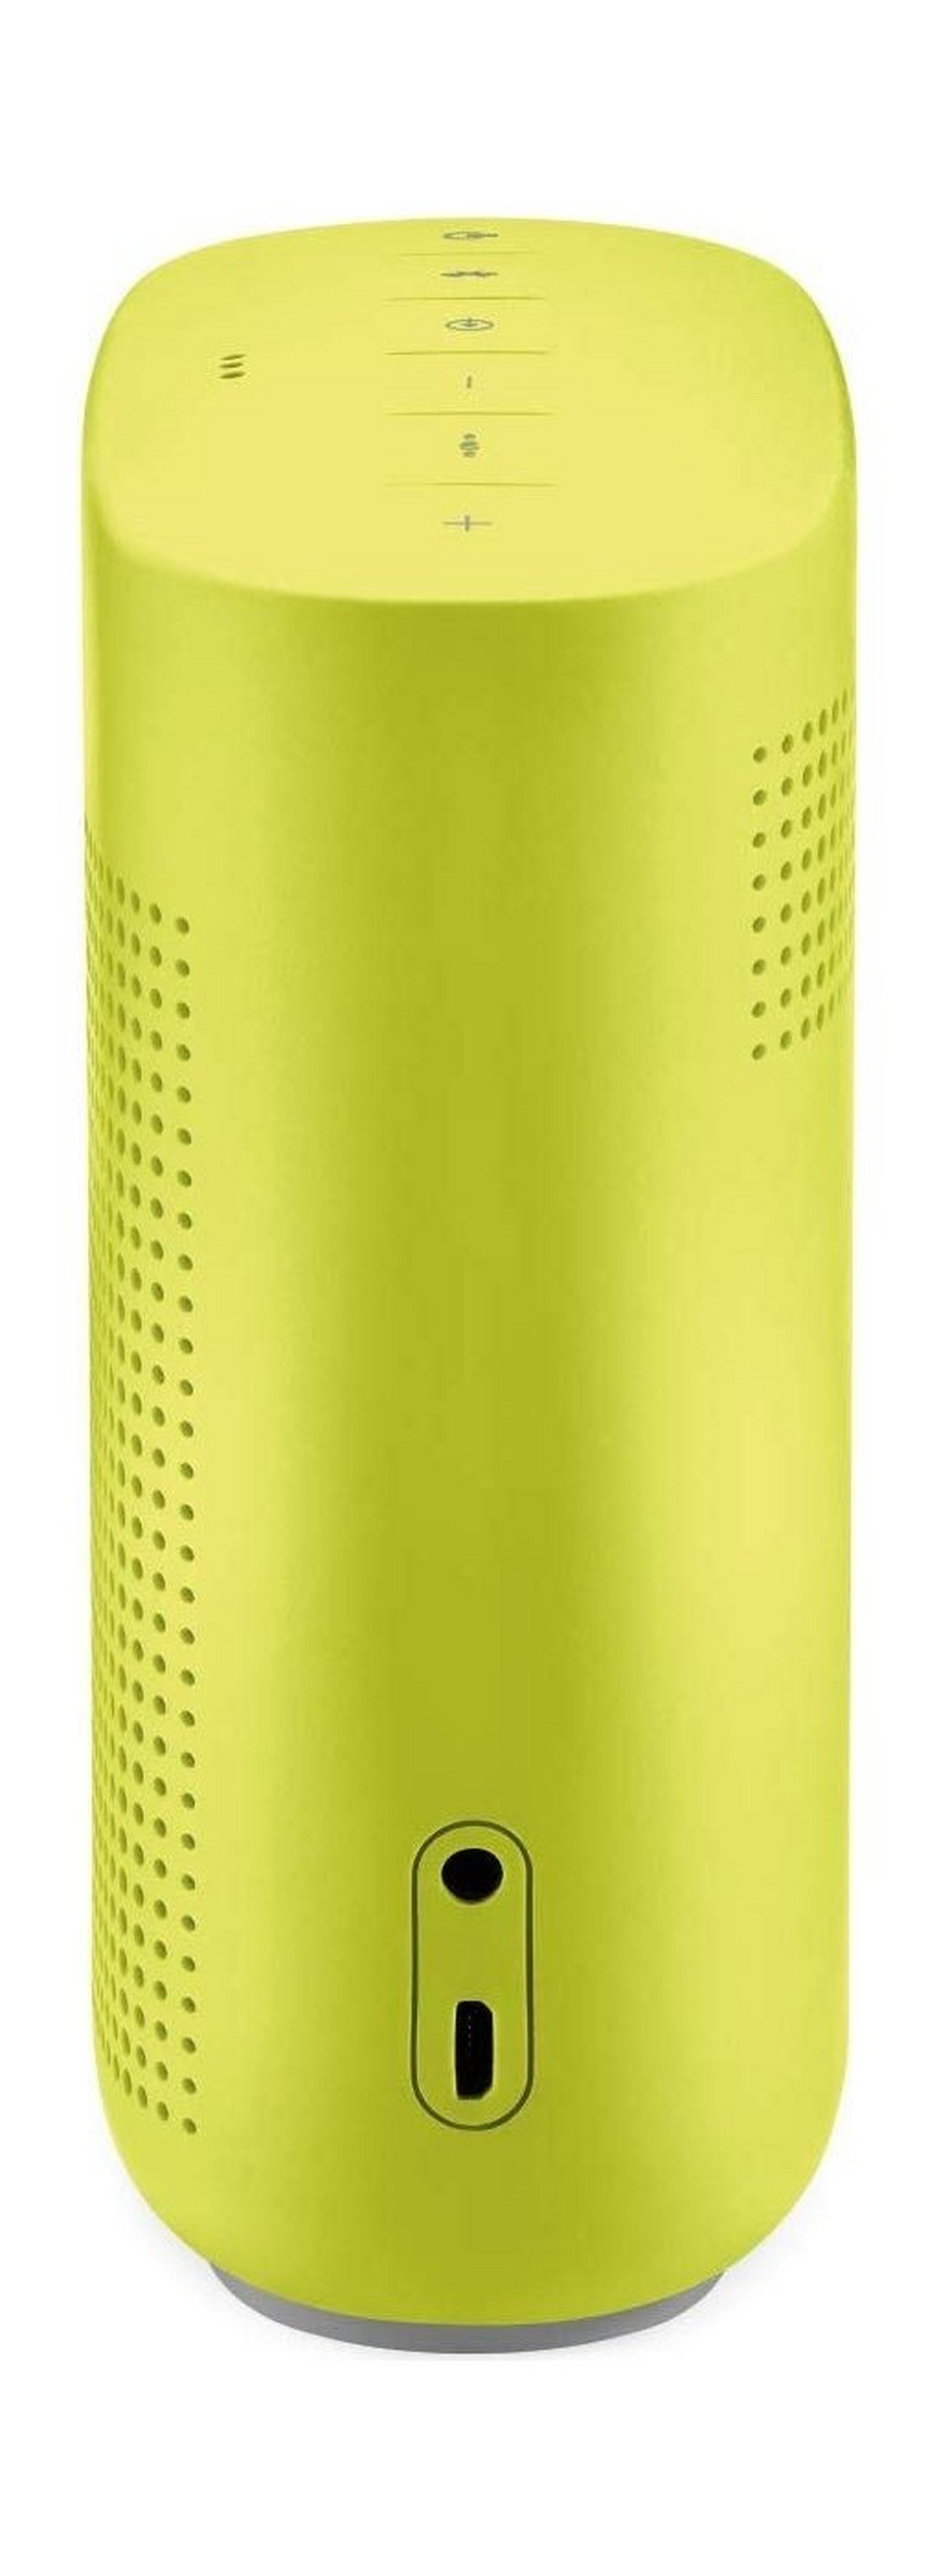 Bose SoundLink Colour II Bluetooth Speaker - Yellow